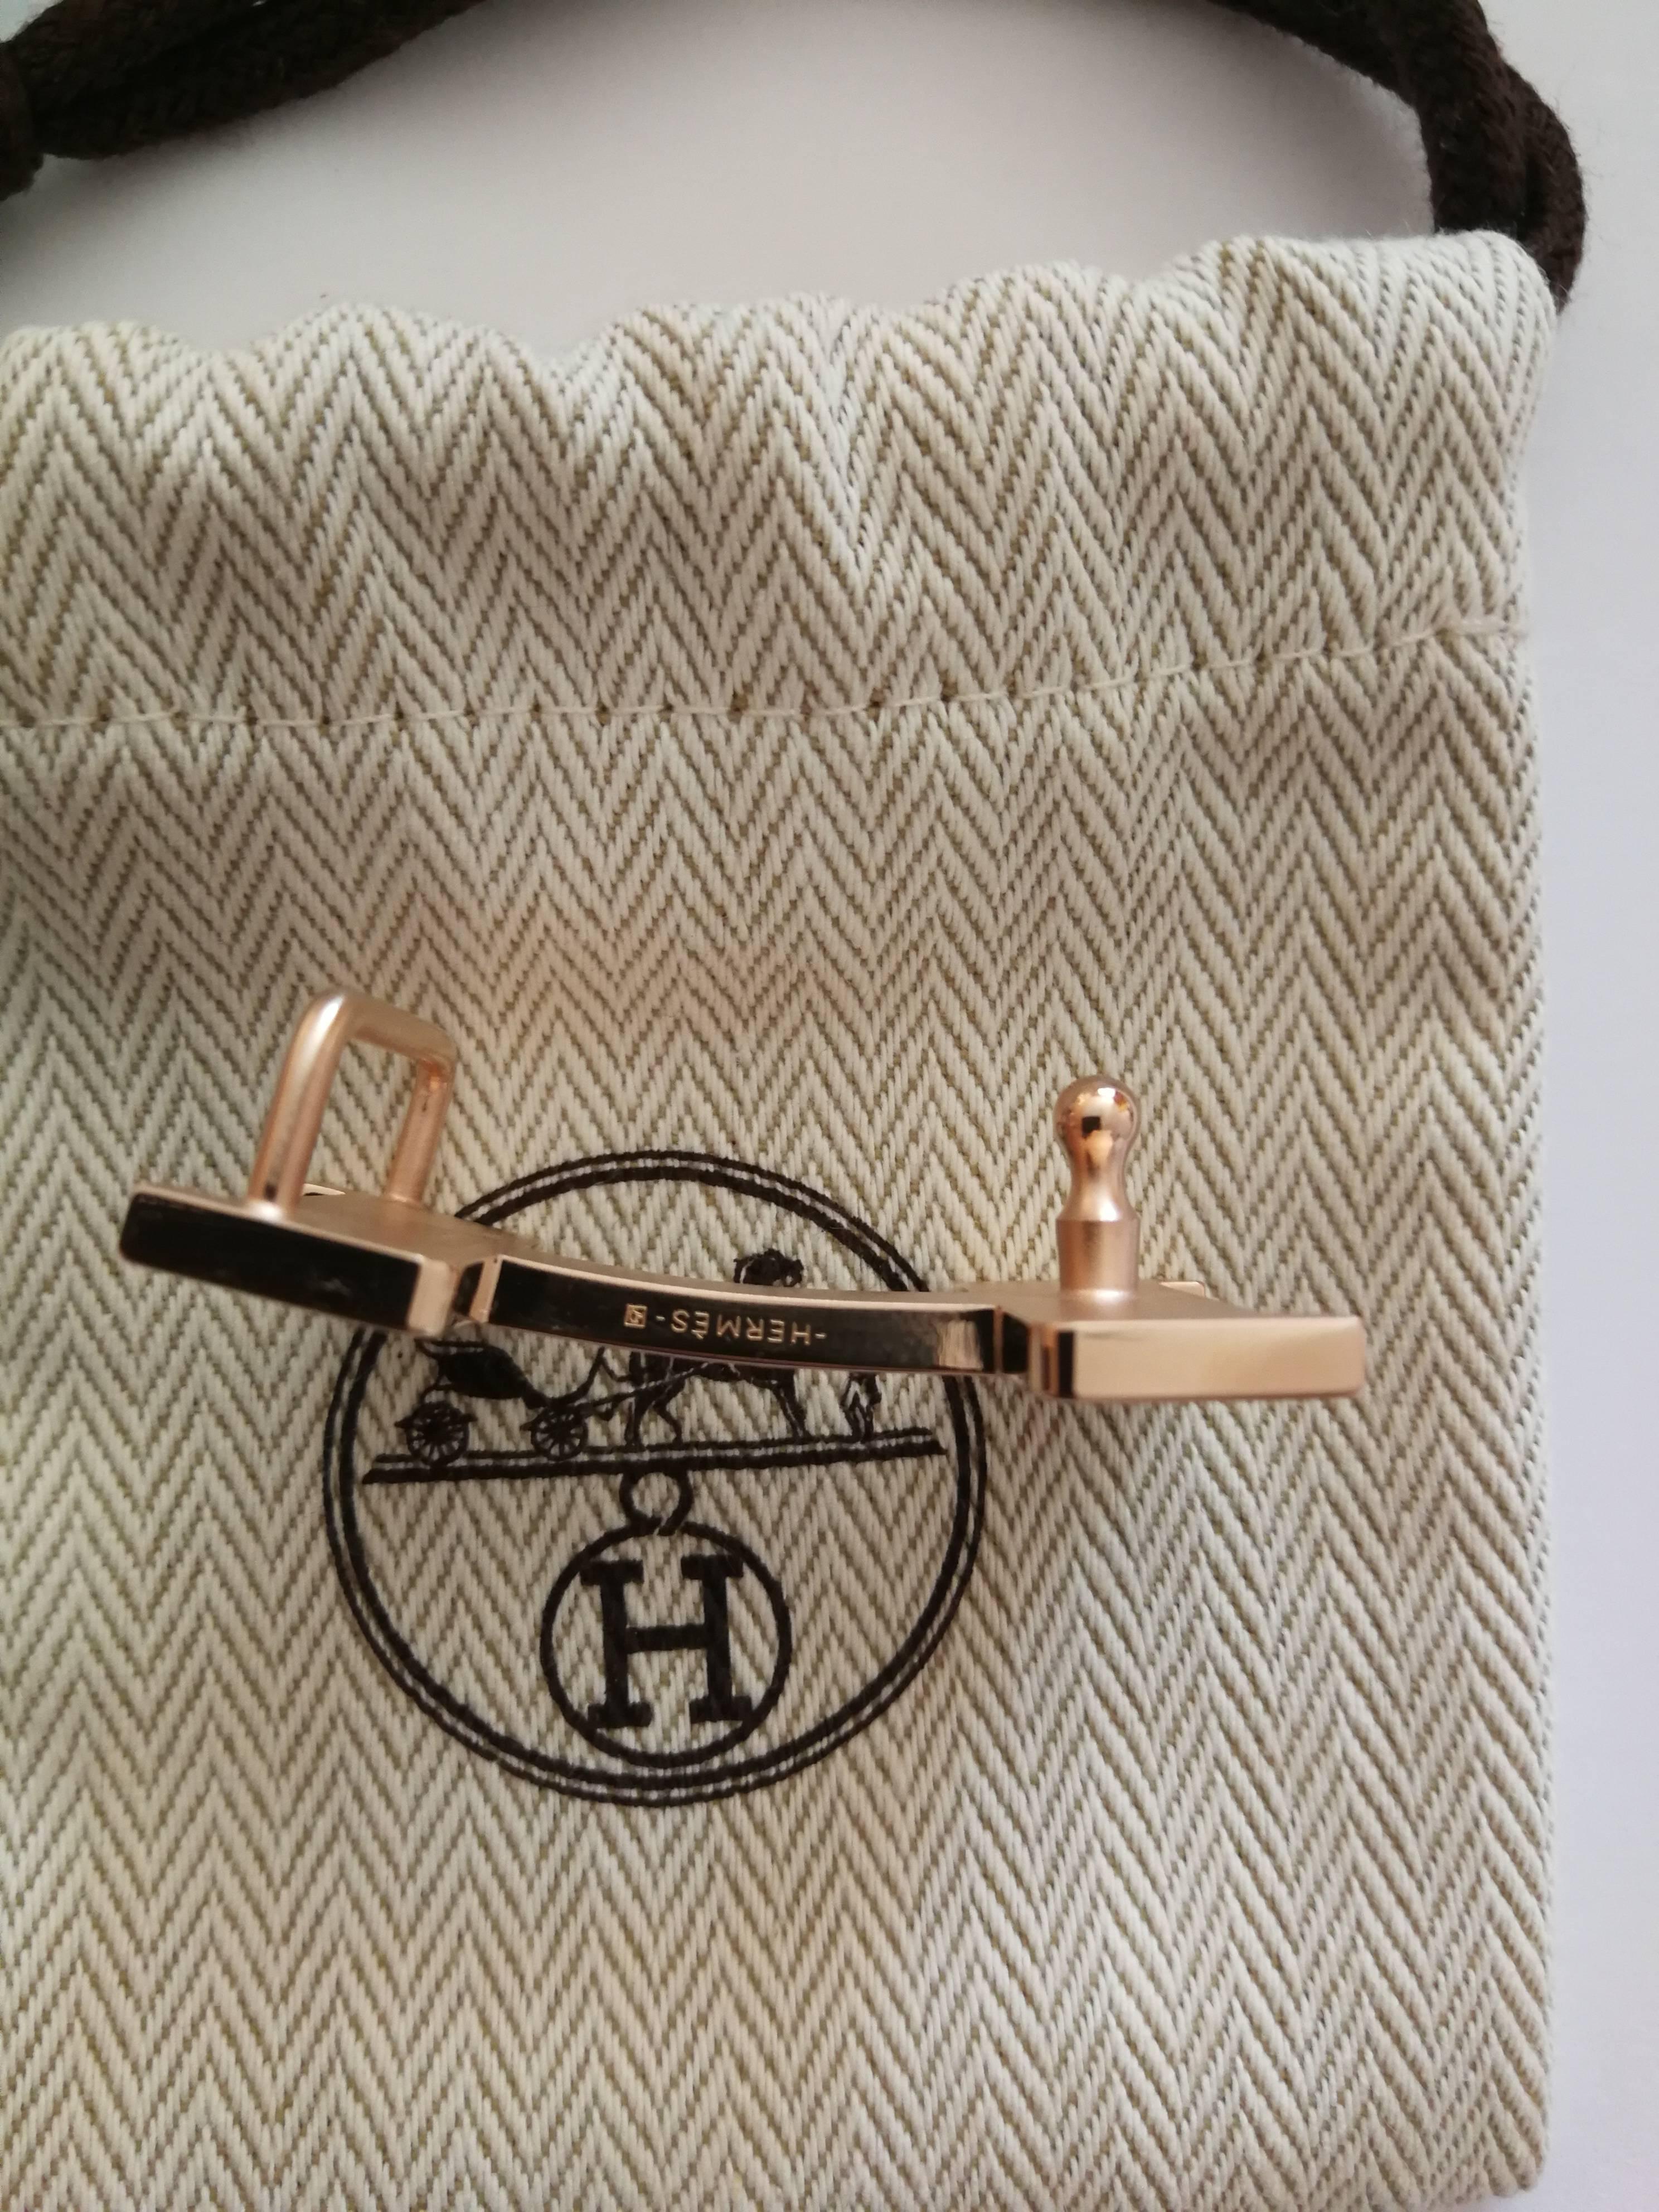 Rare Hermès Mini Constance H Buckle for strap 2.4 cm PinK Gold / Good Condition 3